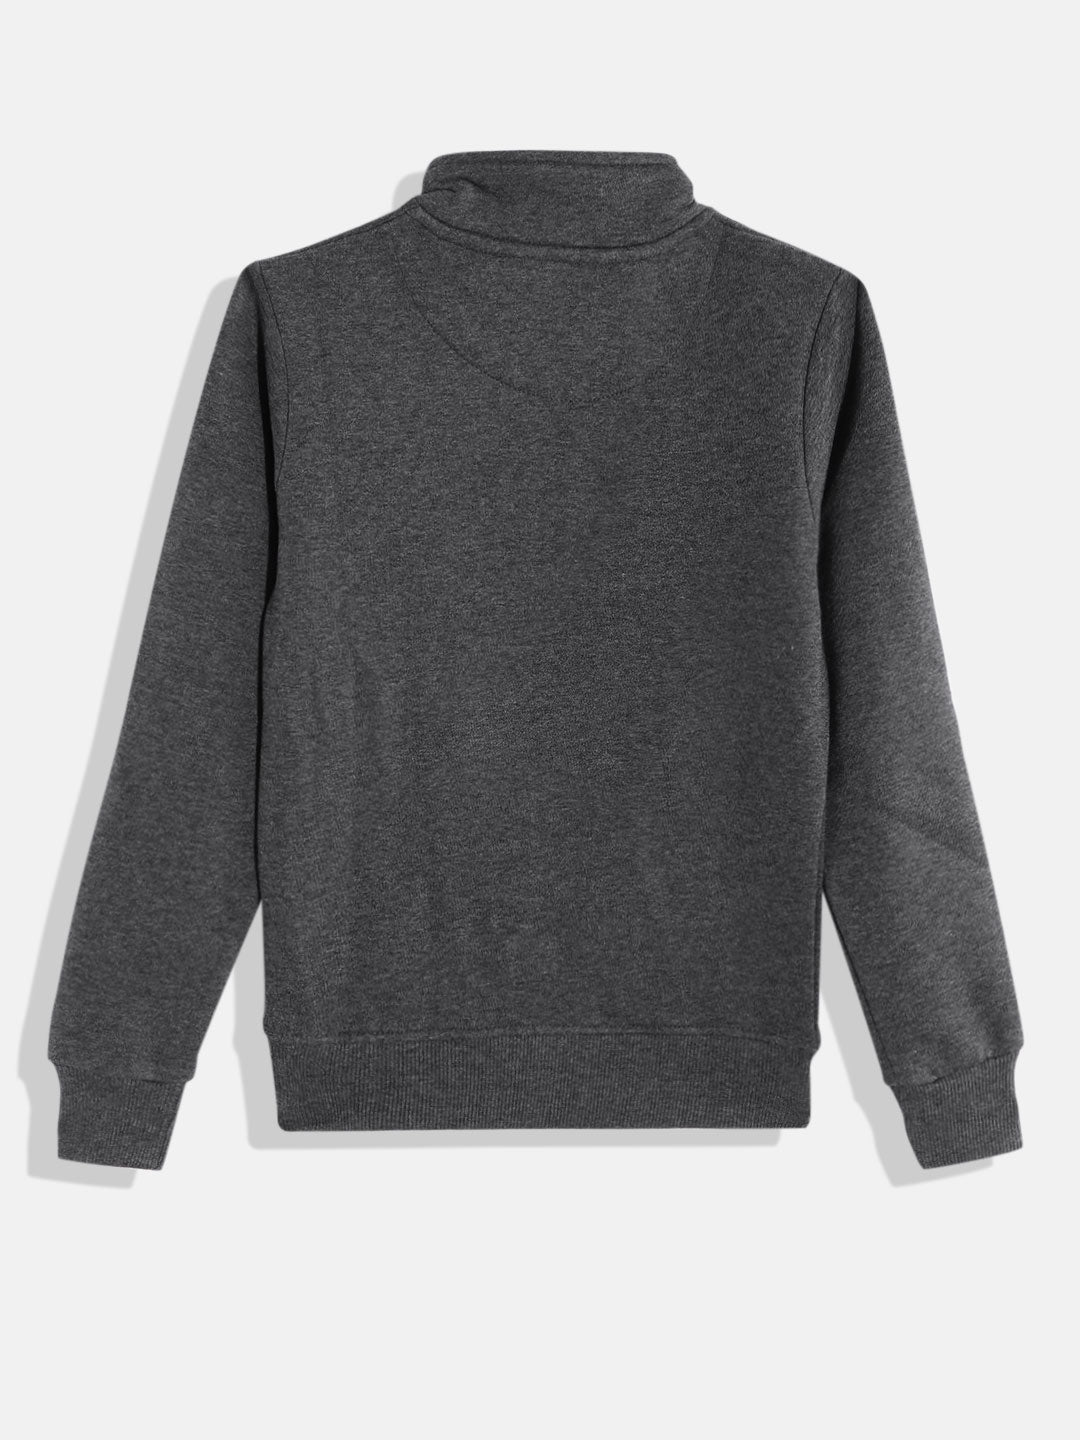 Alcis Boys Charcoal Grey Solid Sweatshirt